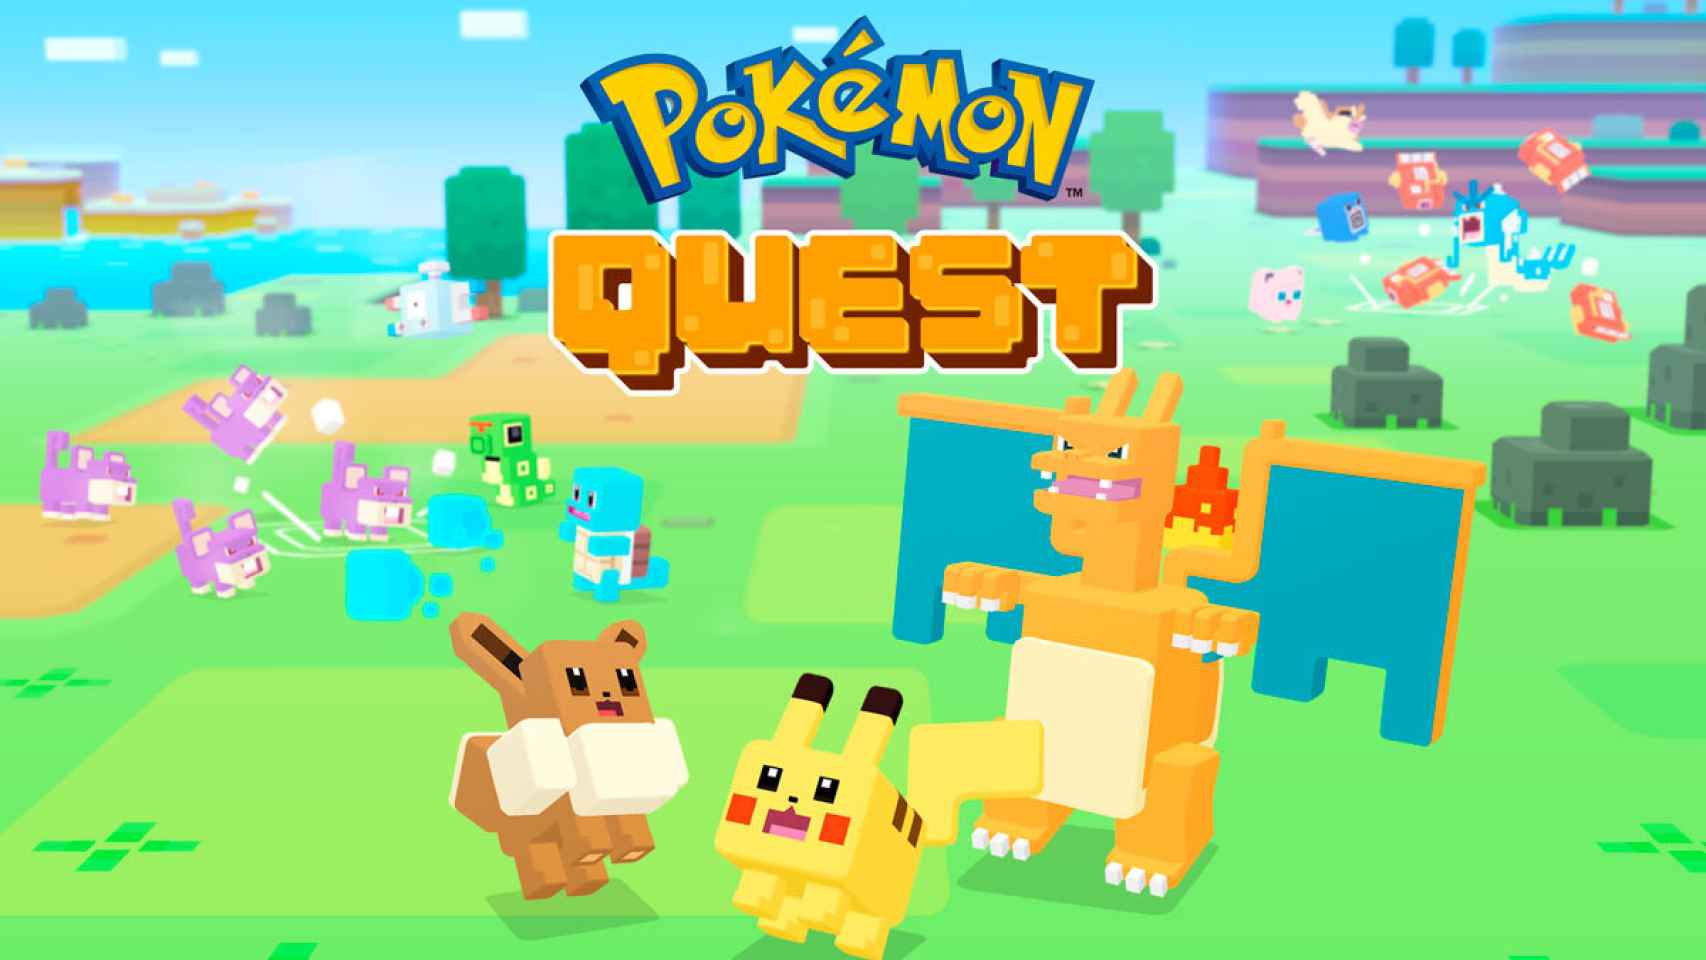 Pokémon Quest tras una semana en Android. ¿Cumplió las expectativas?